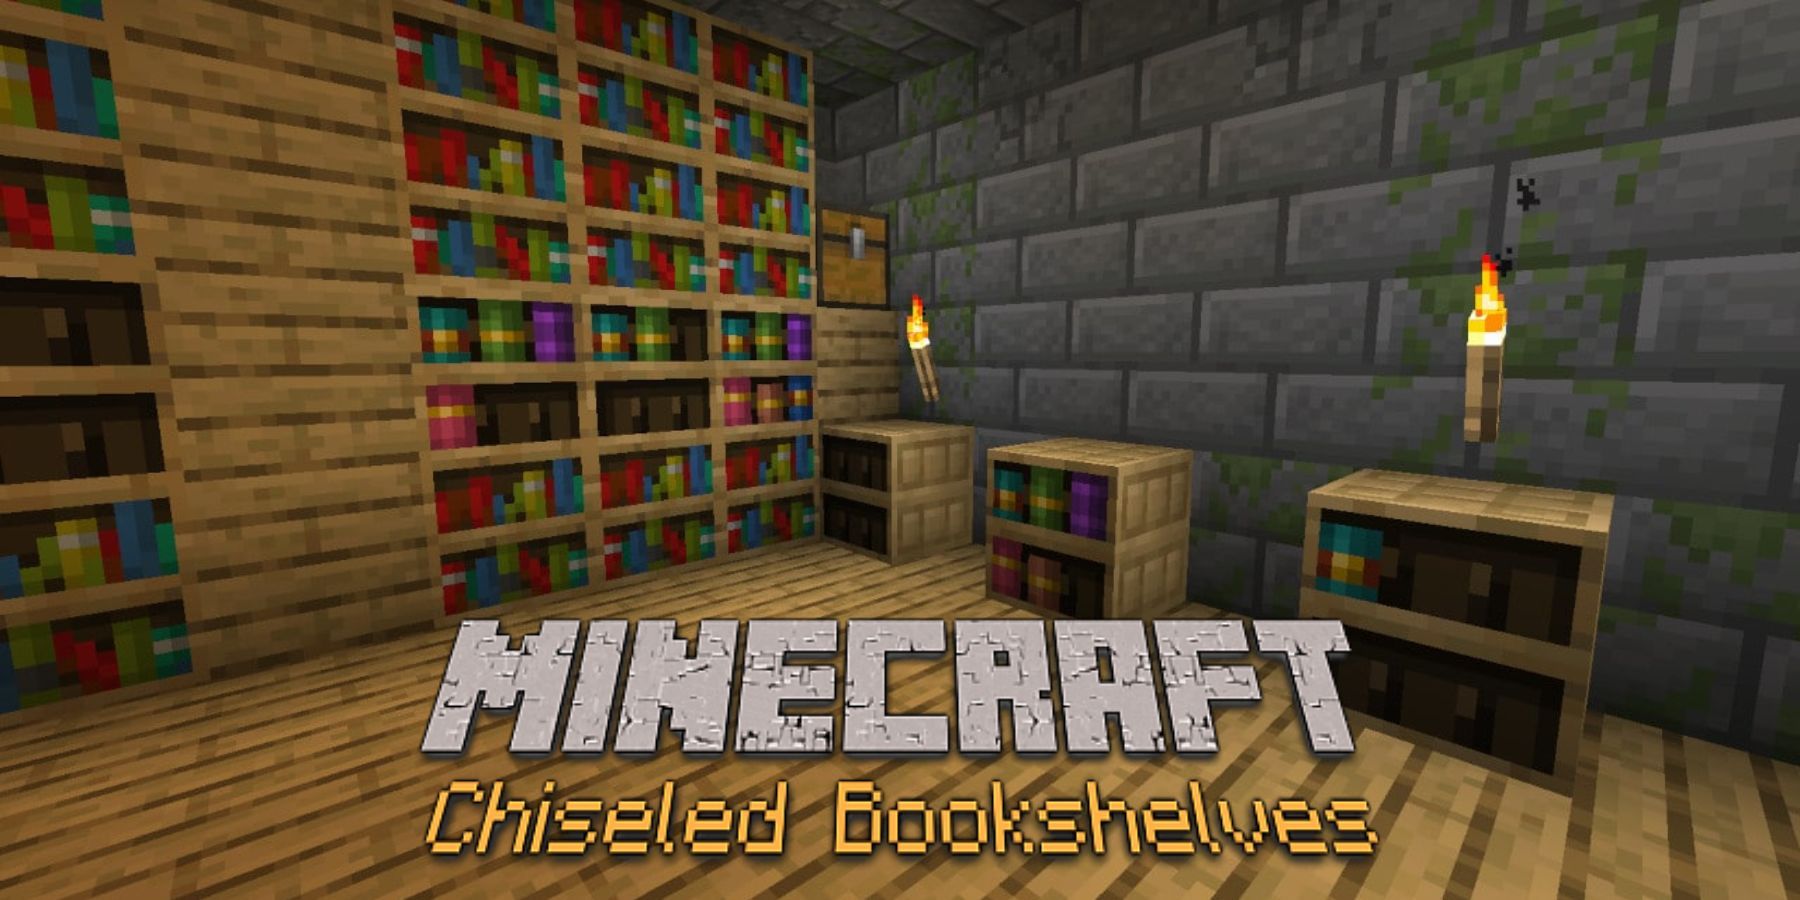 Let's talk about Chiseled Bookshelves! – Minecraft Feedback